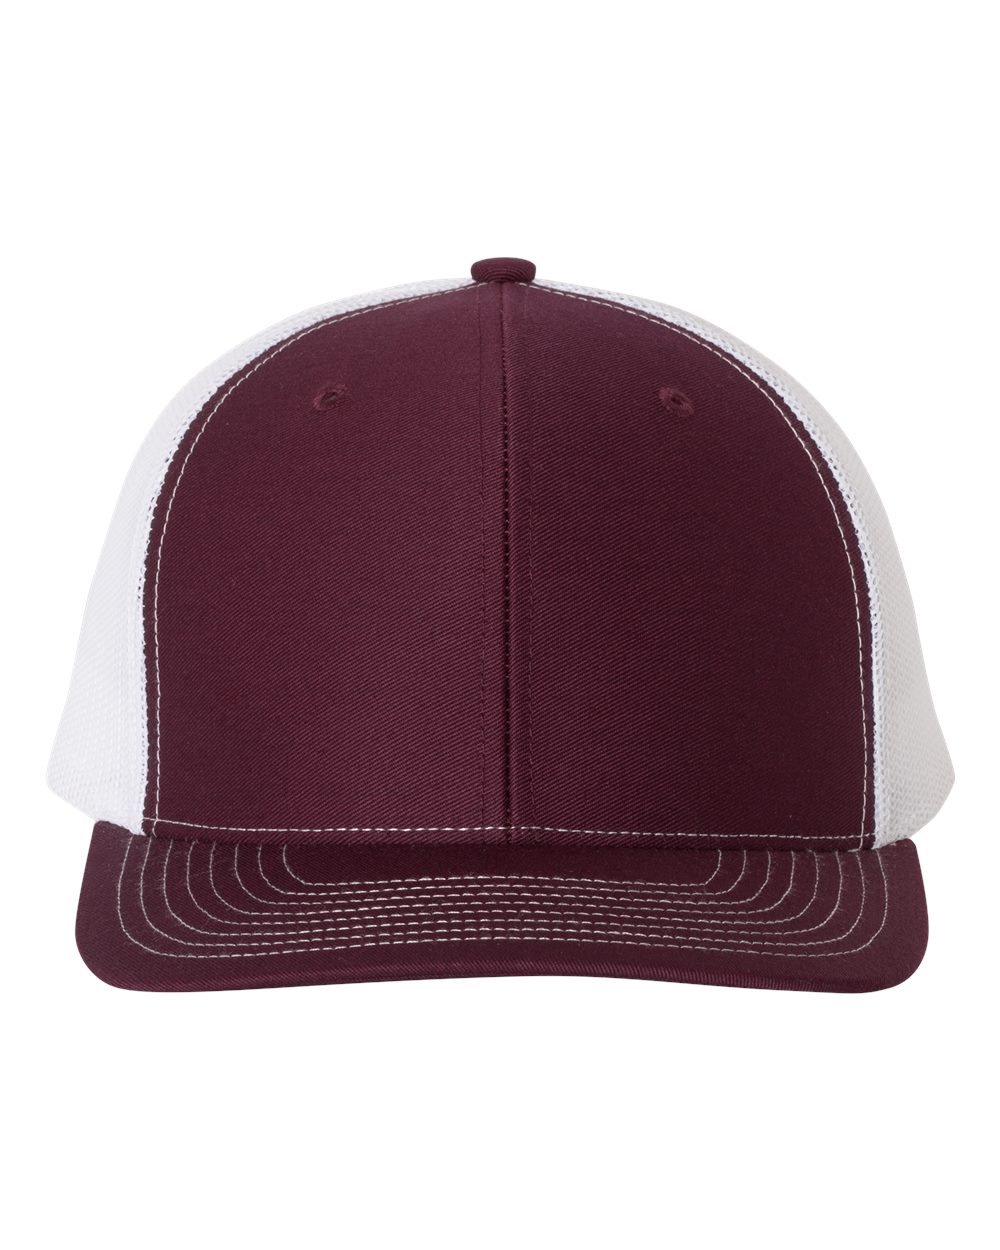 Richardson Snapback Trucker Hat (112) in Maroon/White